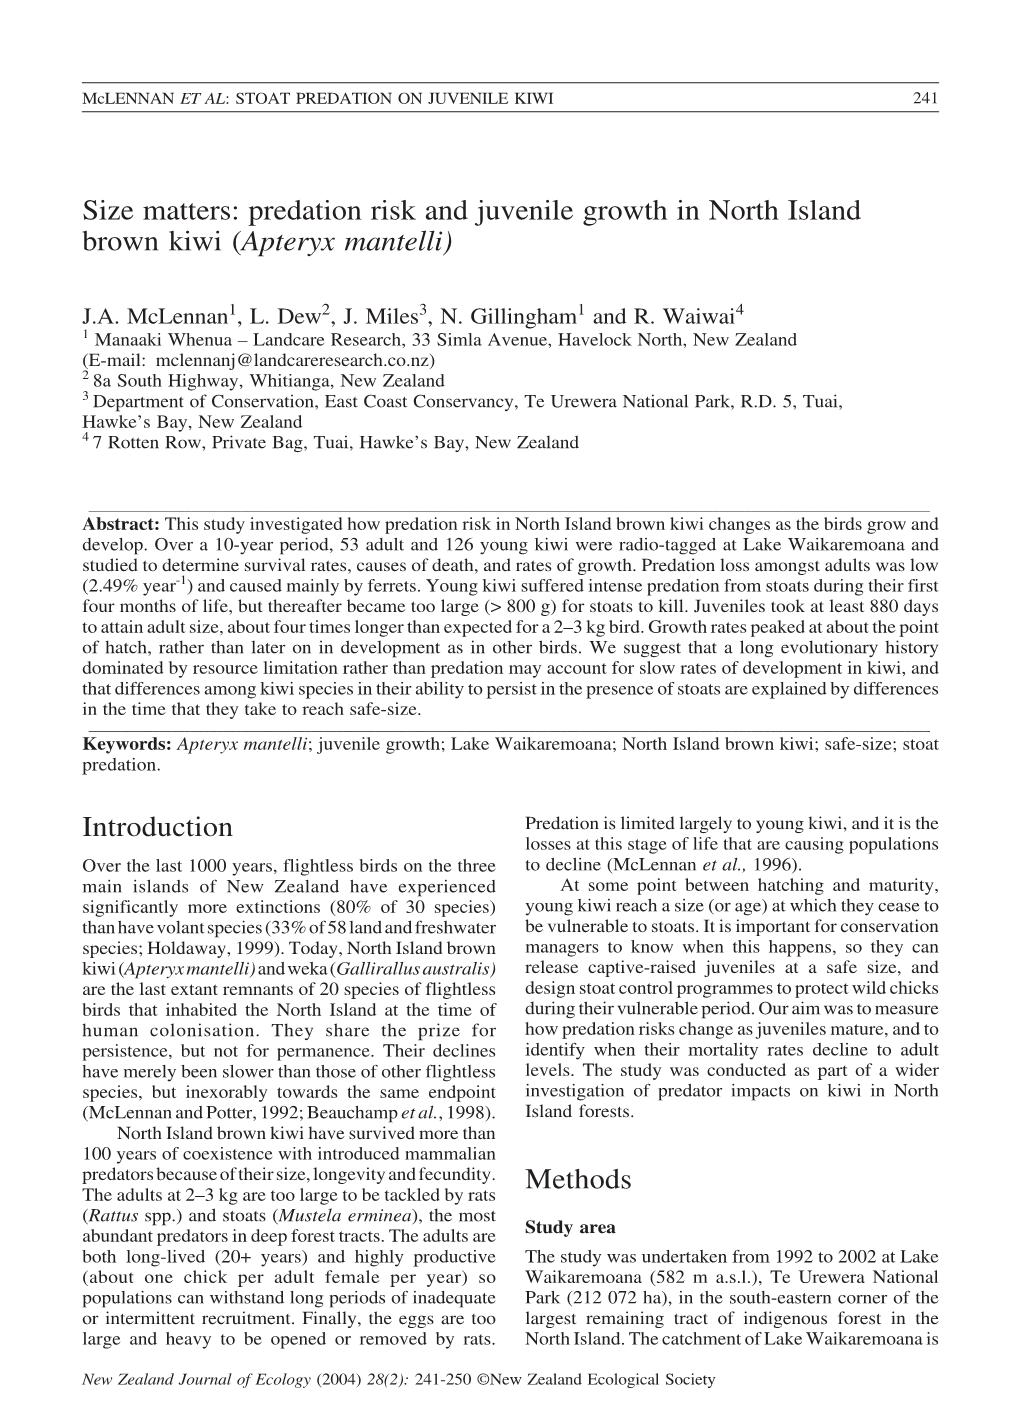 Predation Risk and Juvenile Growth in North Island Brown Kiwi (Apteryx Mantelli)